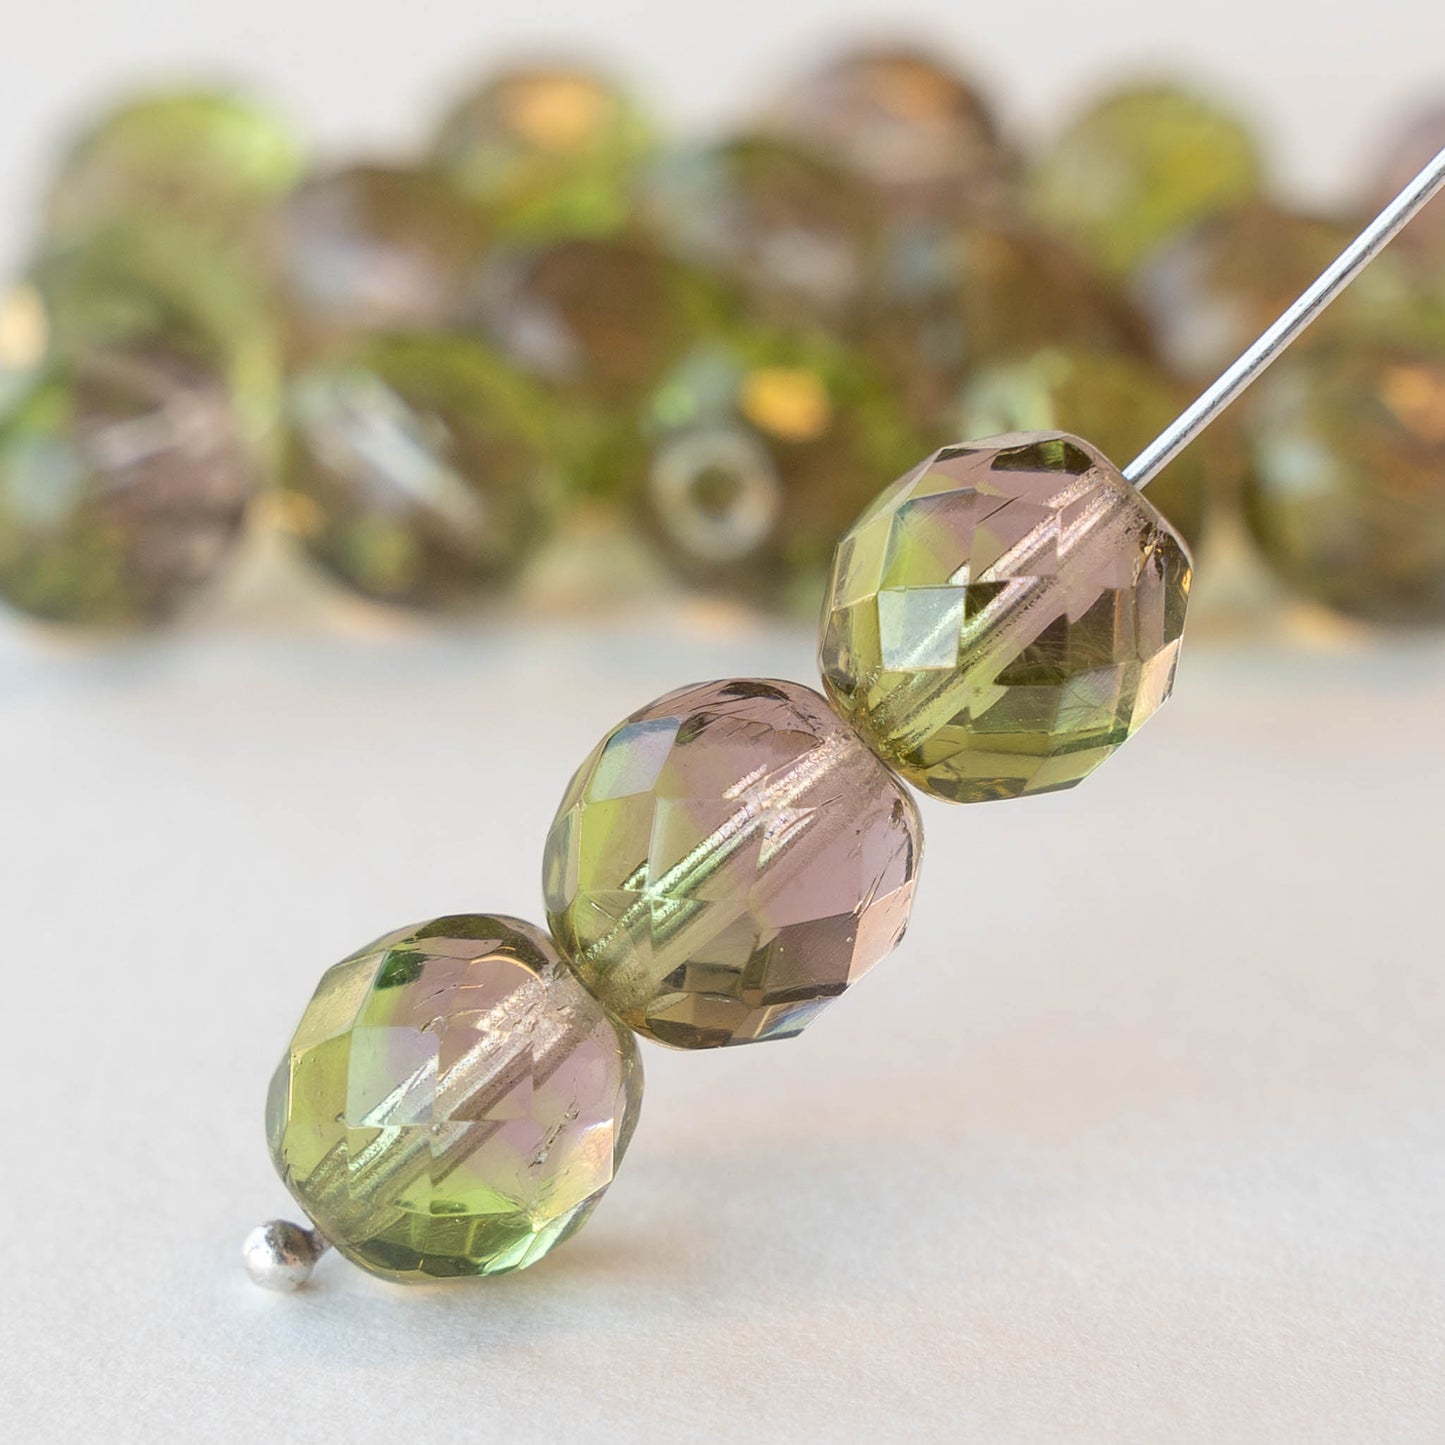 10mm Round Glass Beads - Olivine Amethyst Mix - 10 Beads